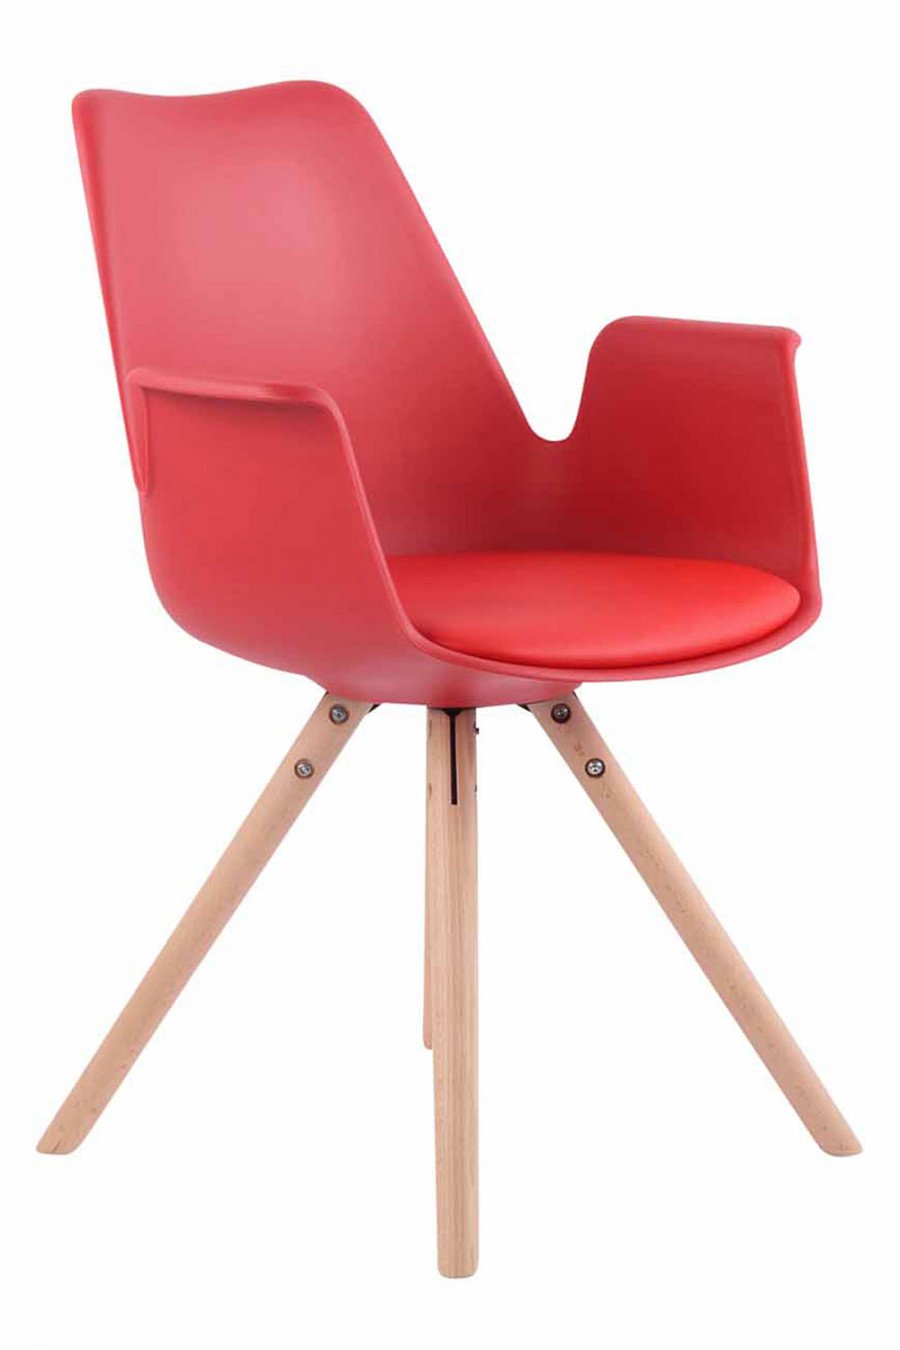 Image of Clp sedia prince plastica rotondo - naturale rosso Arredamento casa cucina Casa & cucina